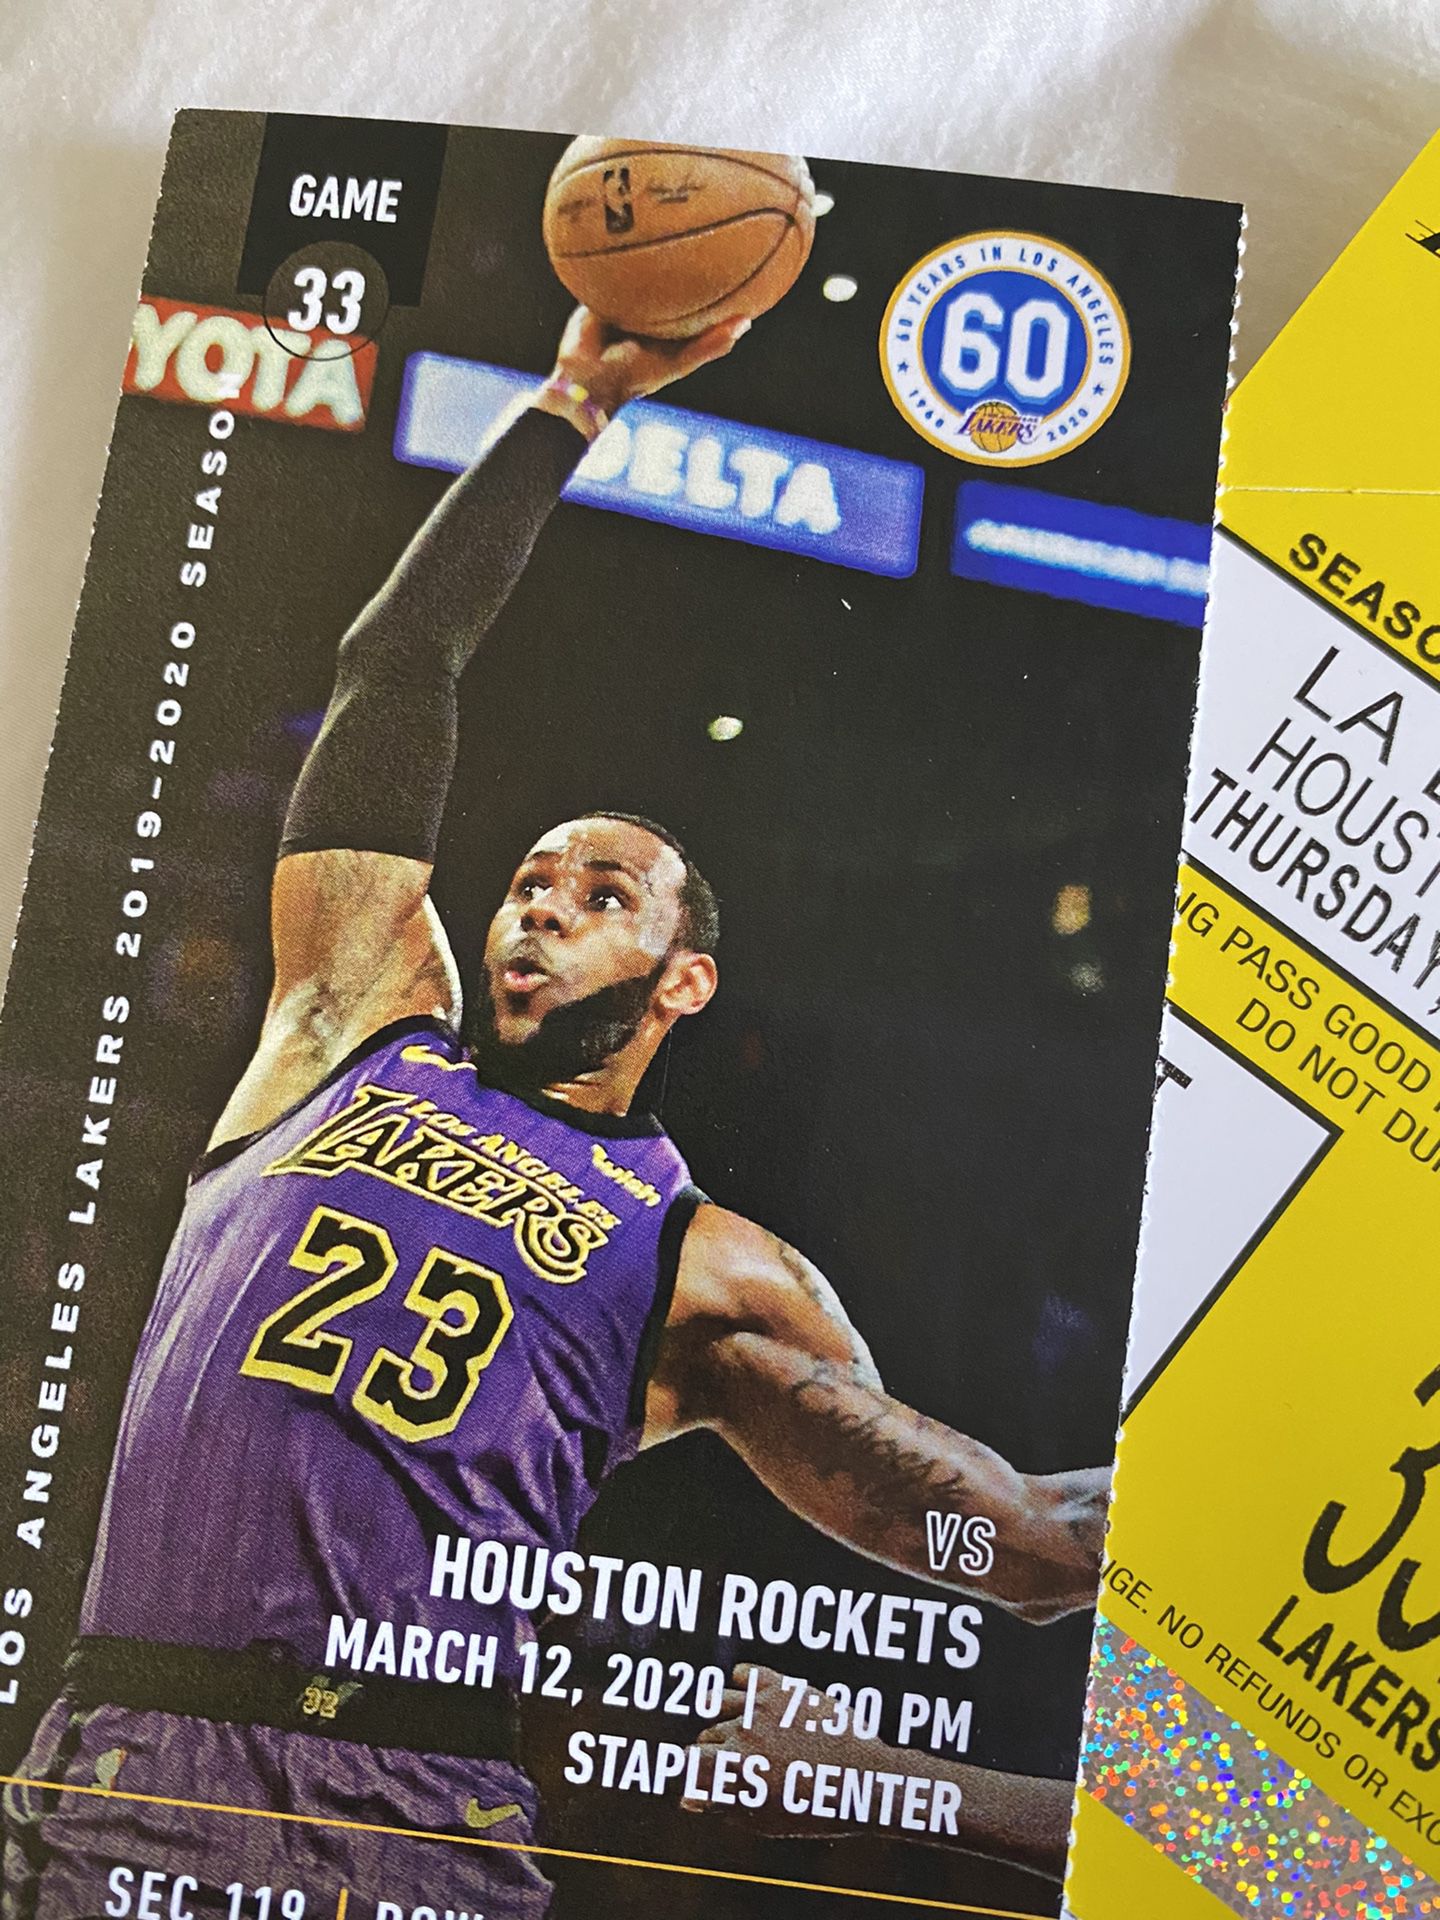 Lakers vs Houston Rockets 3/12/20 Tickets & Parking Pass